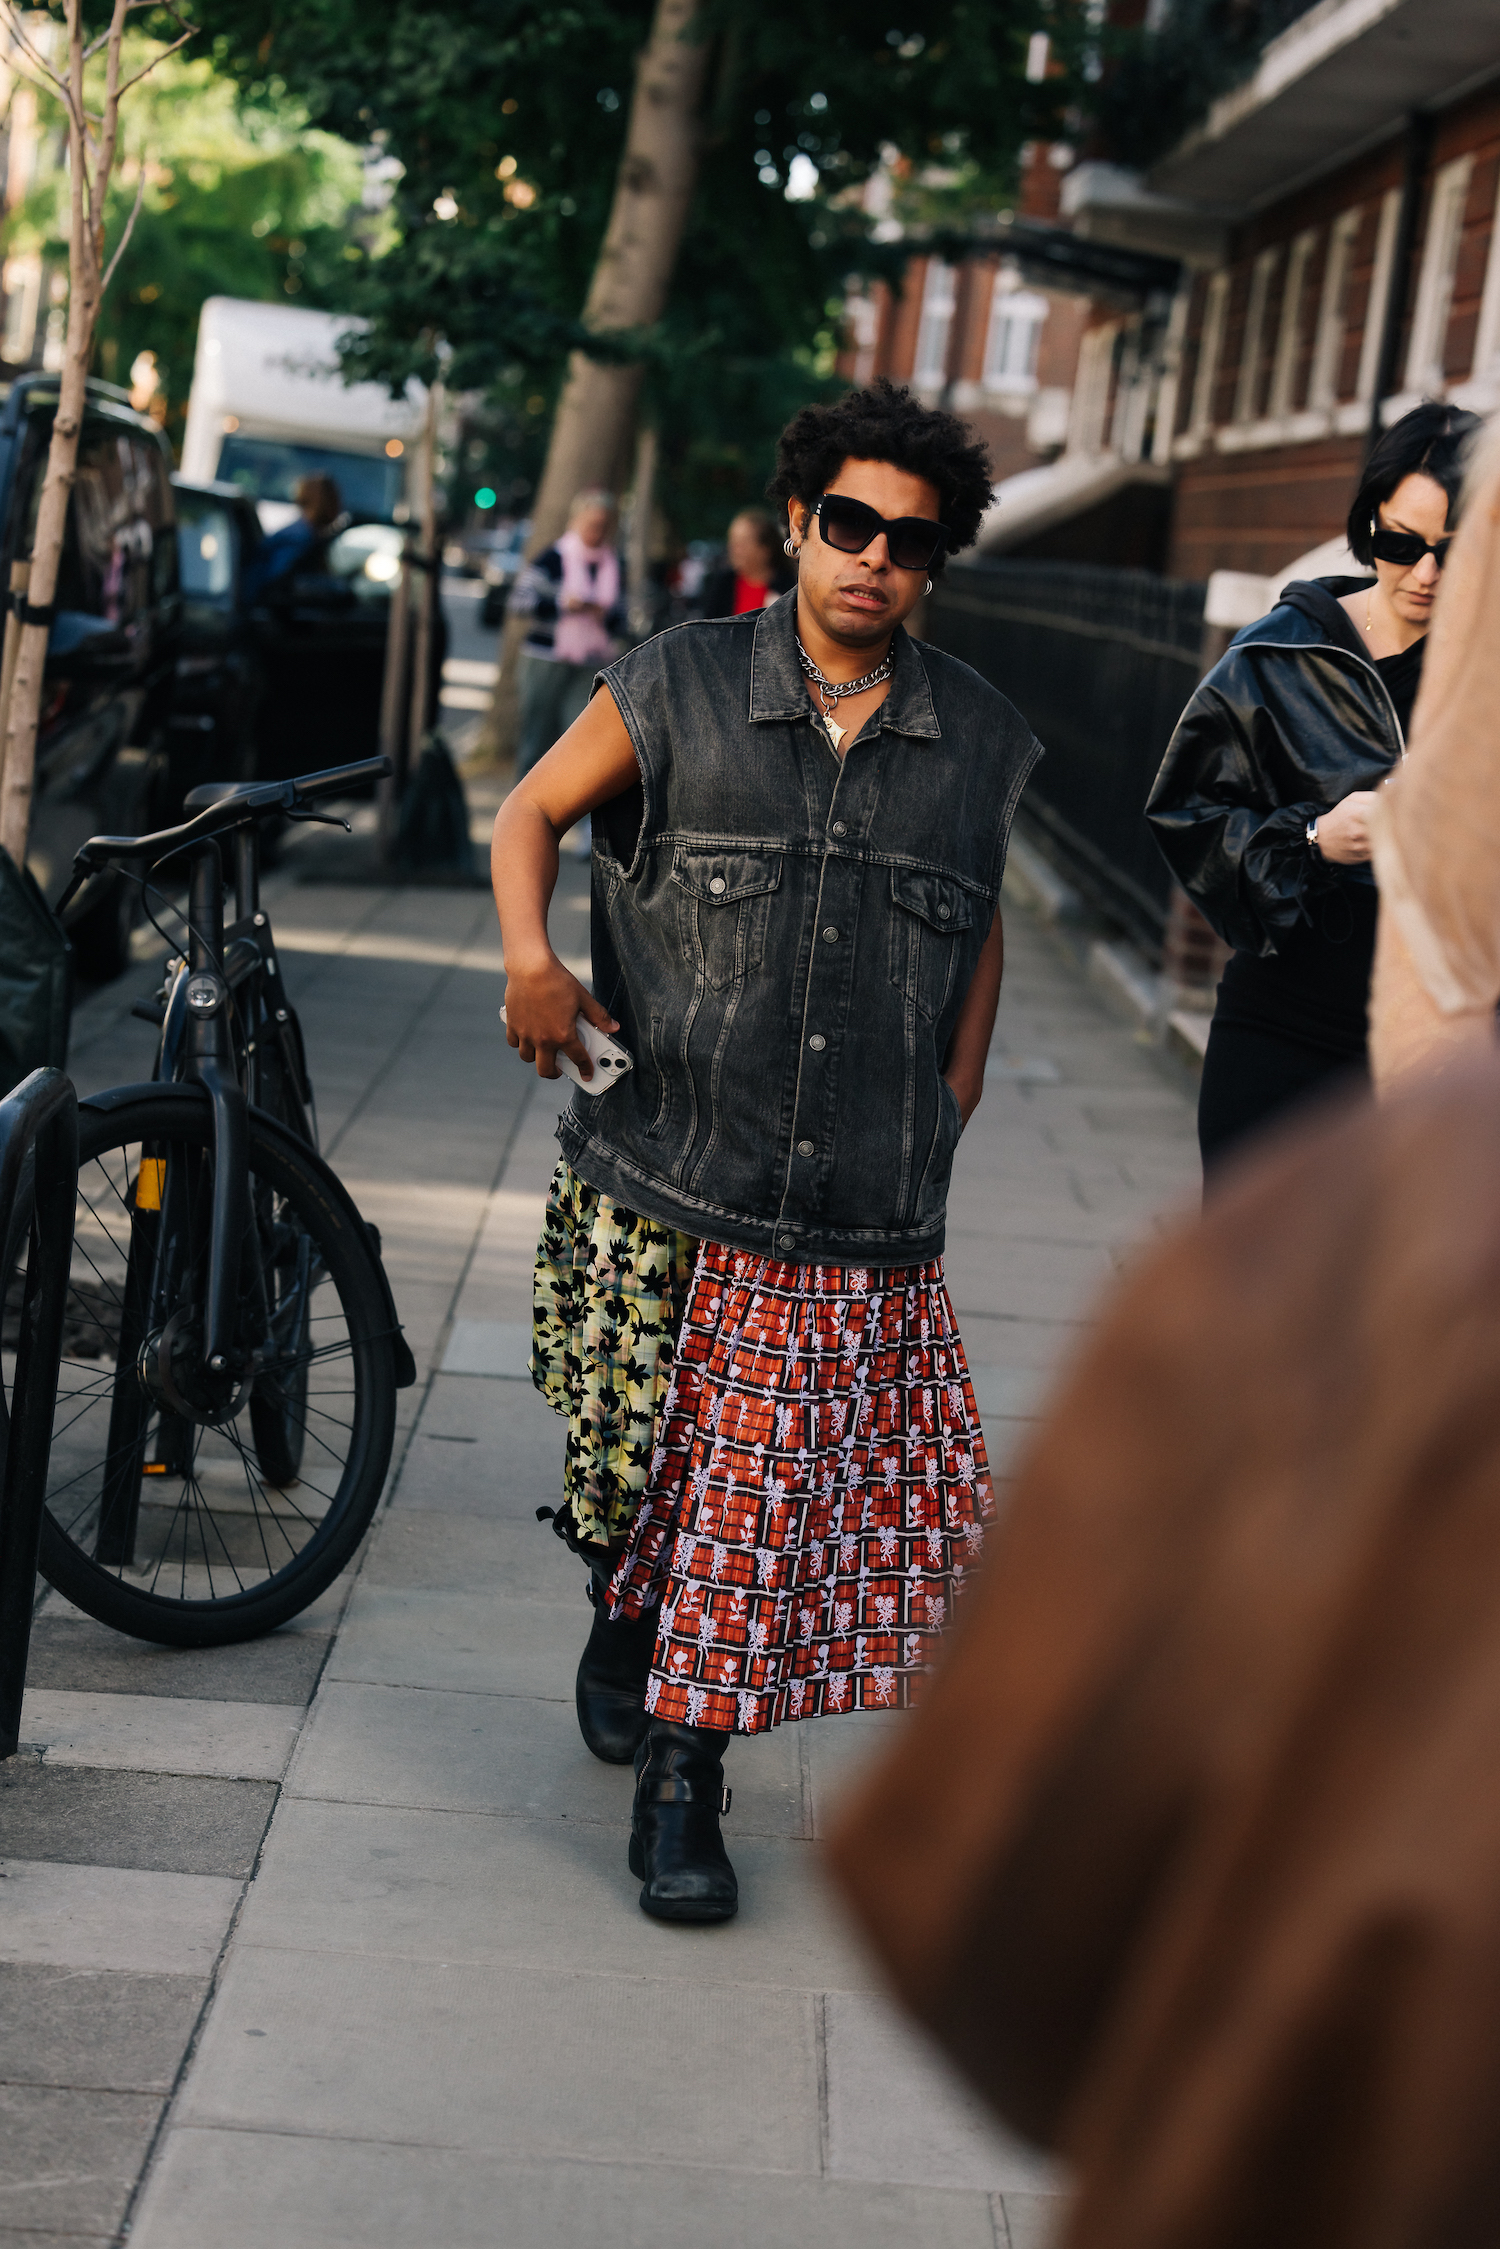 meli melo on X: Street Style Friday with the Thela Tan!   #FashionFridays19 #streetstyle #LFW   / X